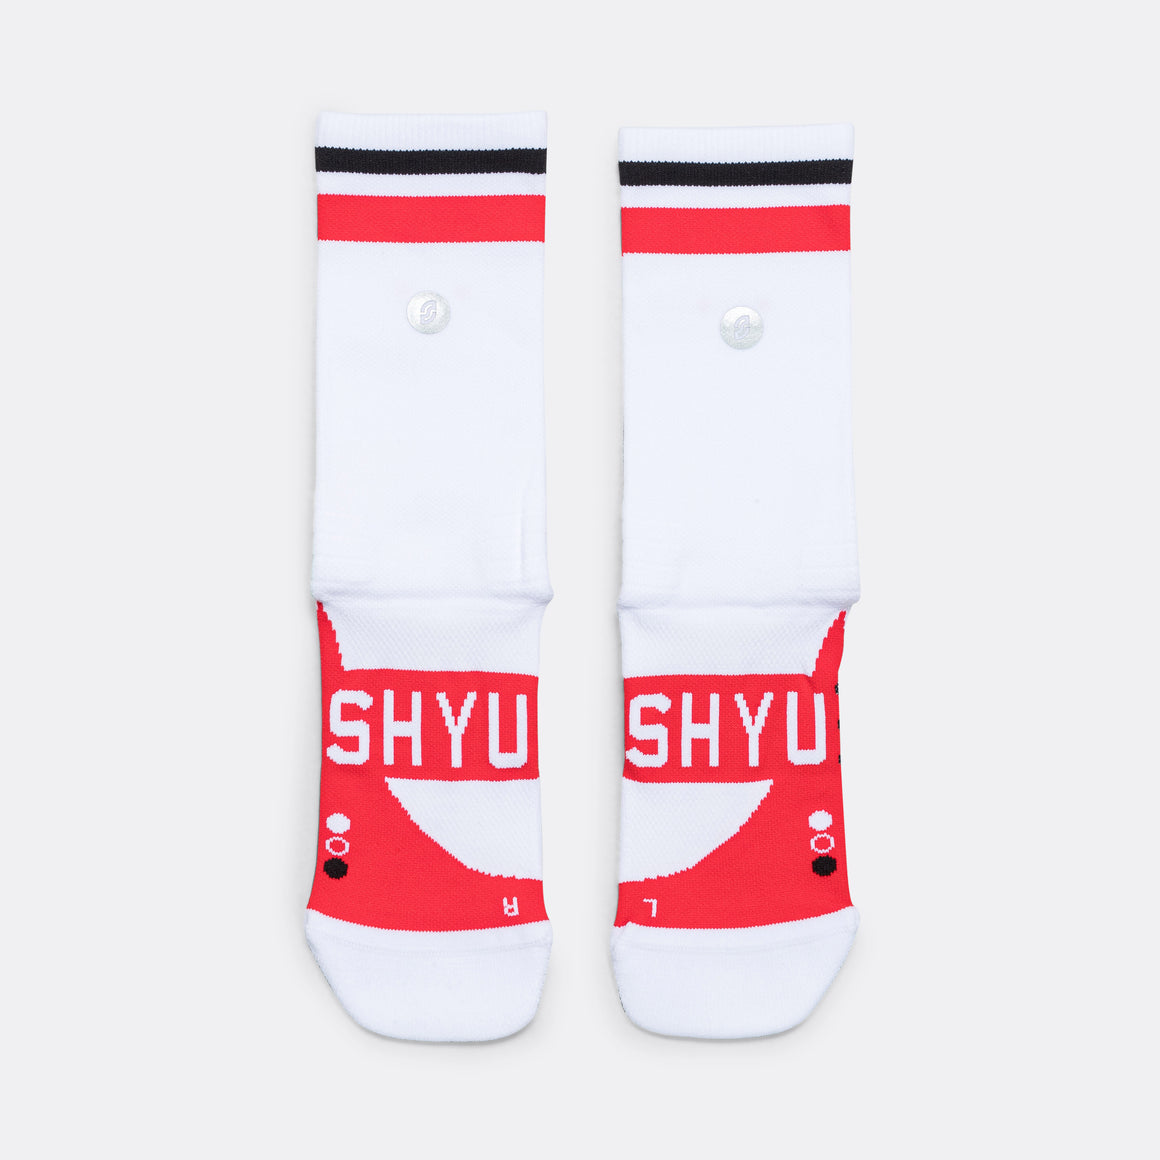 Shyu - Racing Socks - White/Red/Black - Up There Athletics